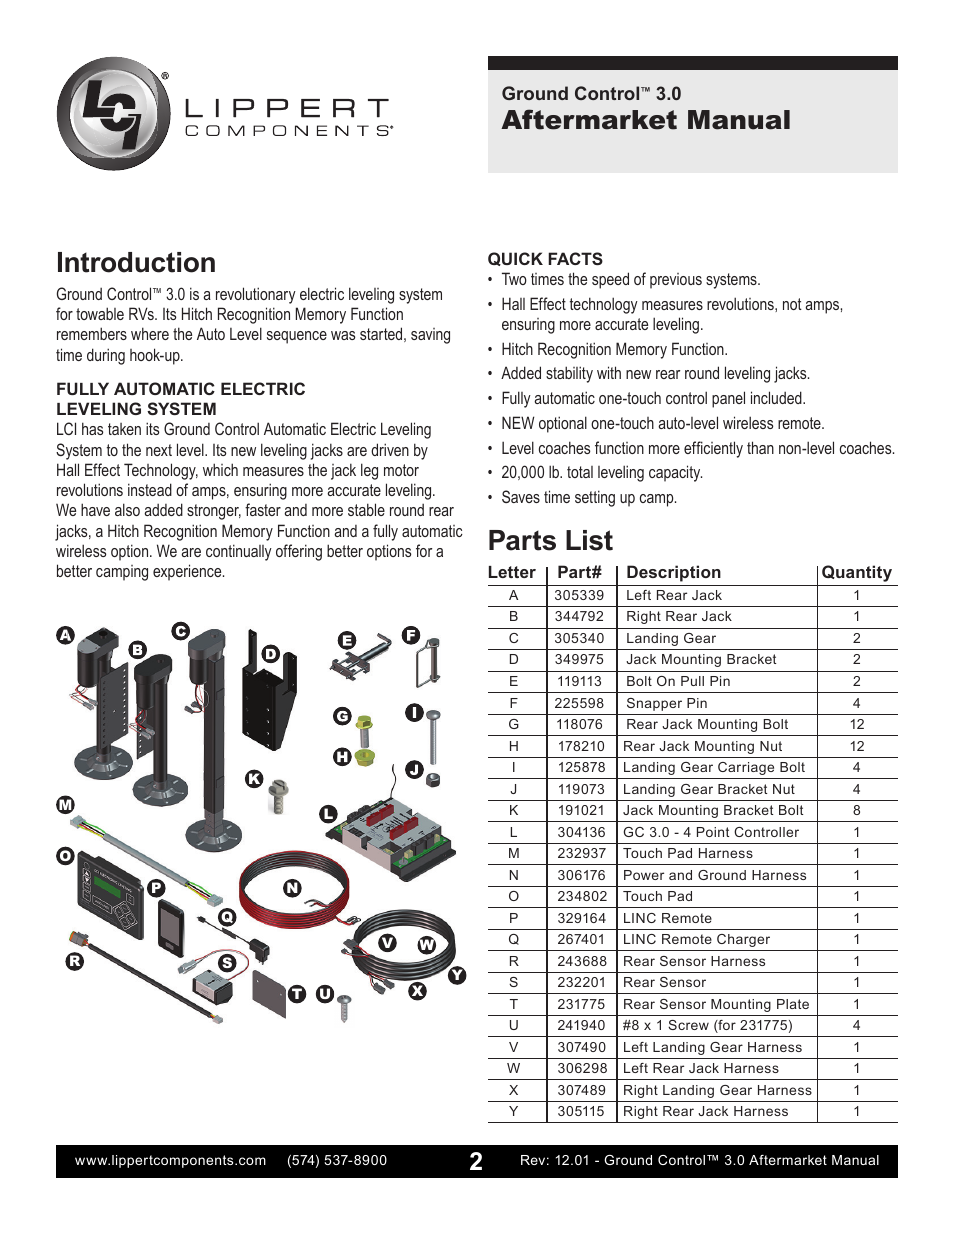 Introduction, Parts list, Aftermarket manual | Lippert Components